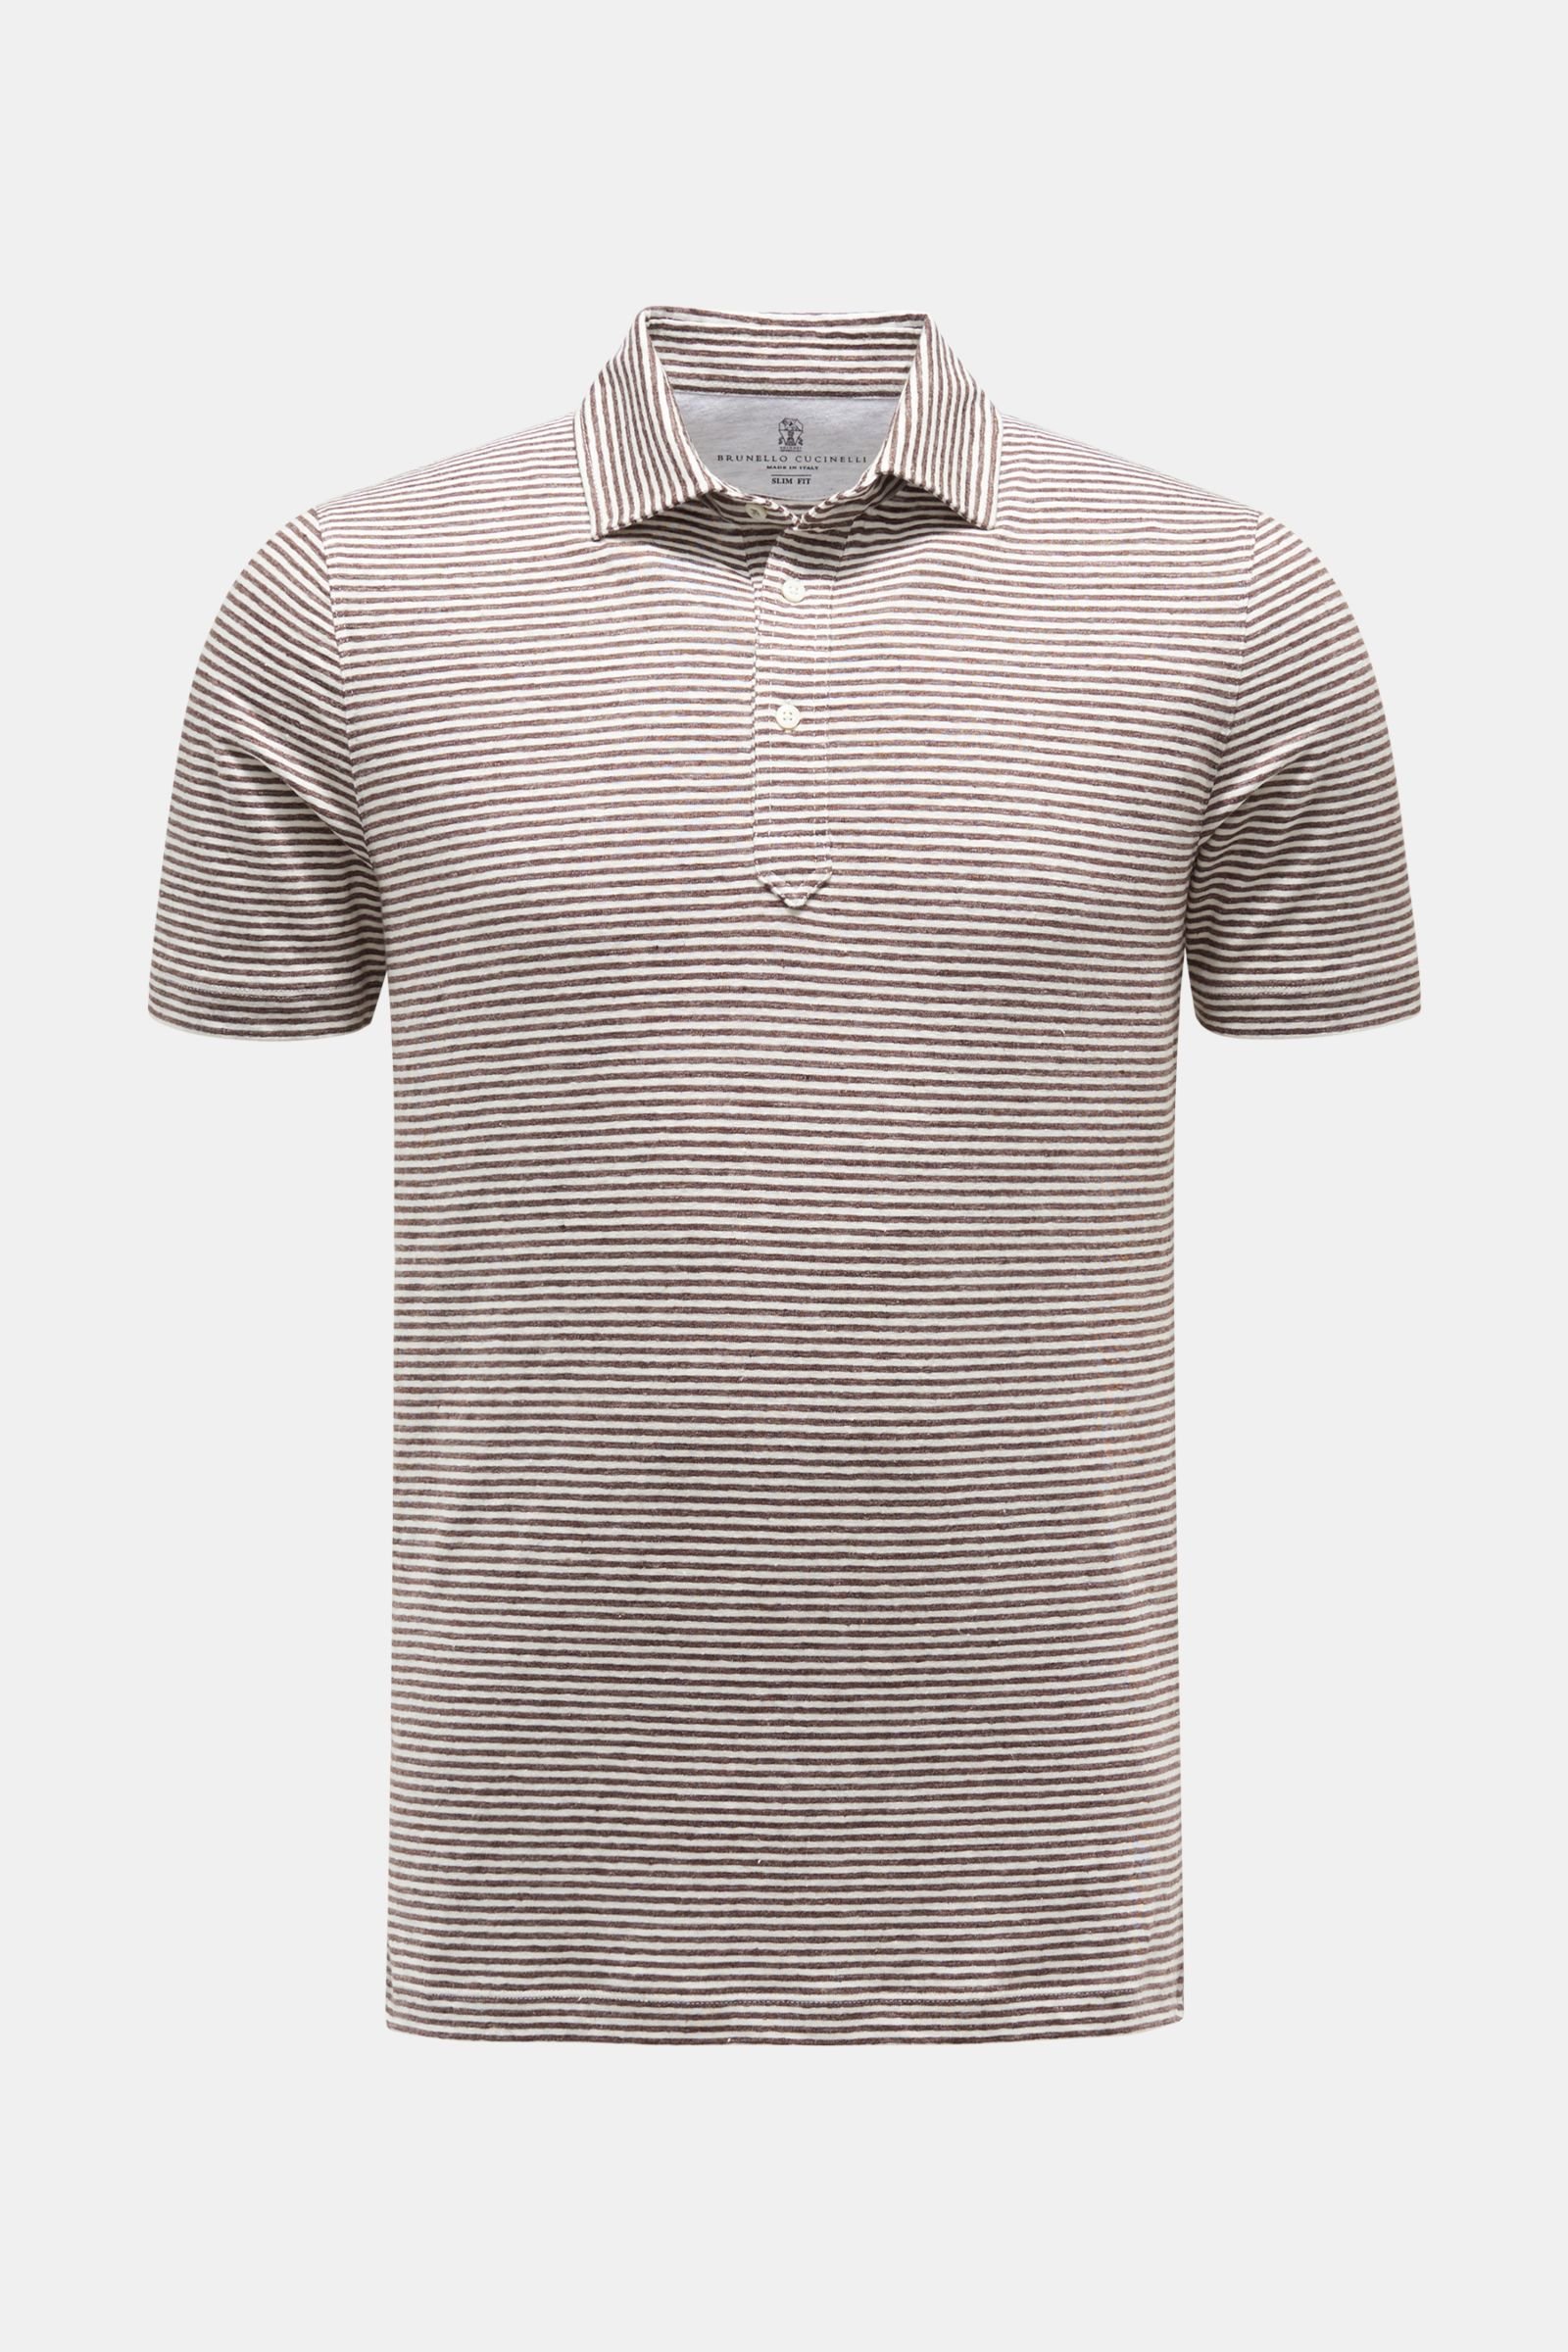 Linen polo shirt dark brown/off-white striped